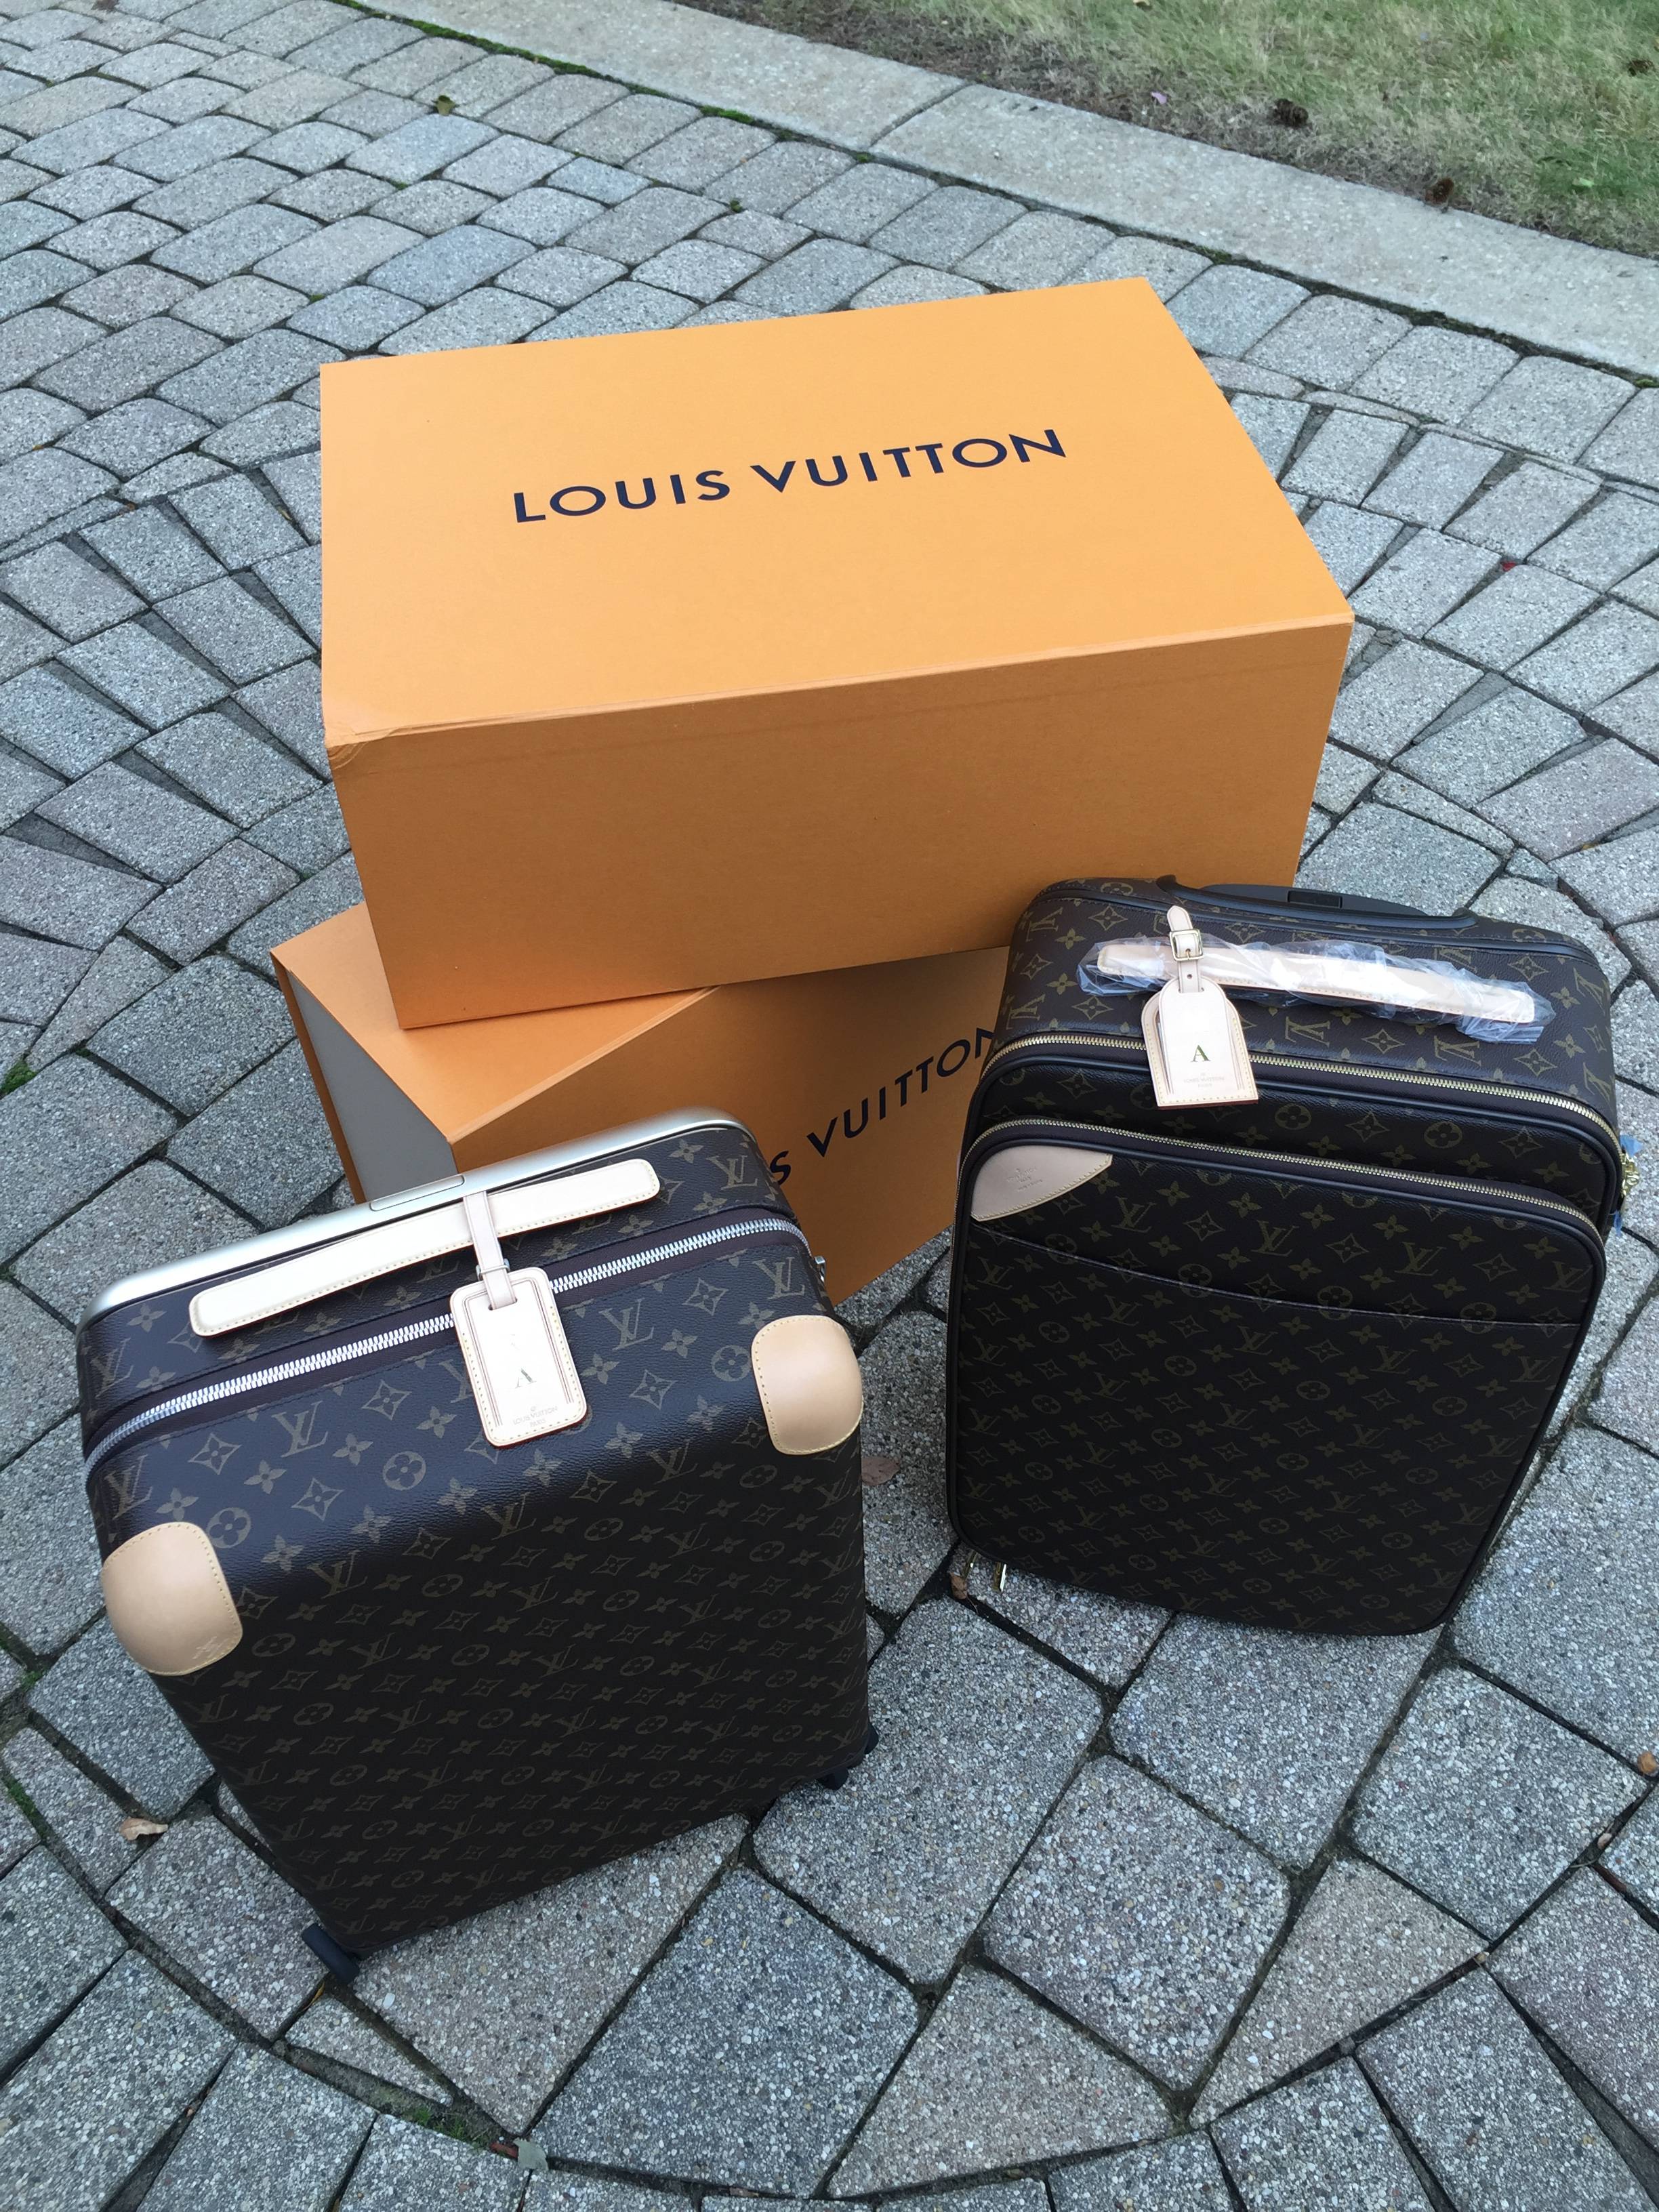 Mr. PurseBop Reveals the Louis Vuitton Luggage - PurseBop